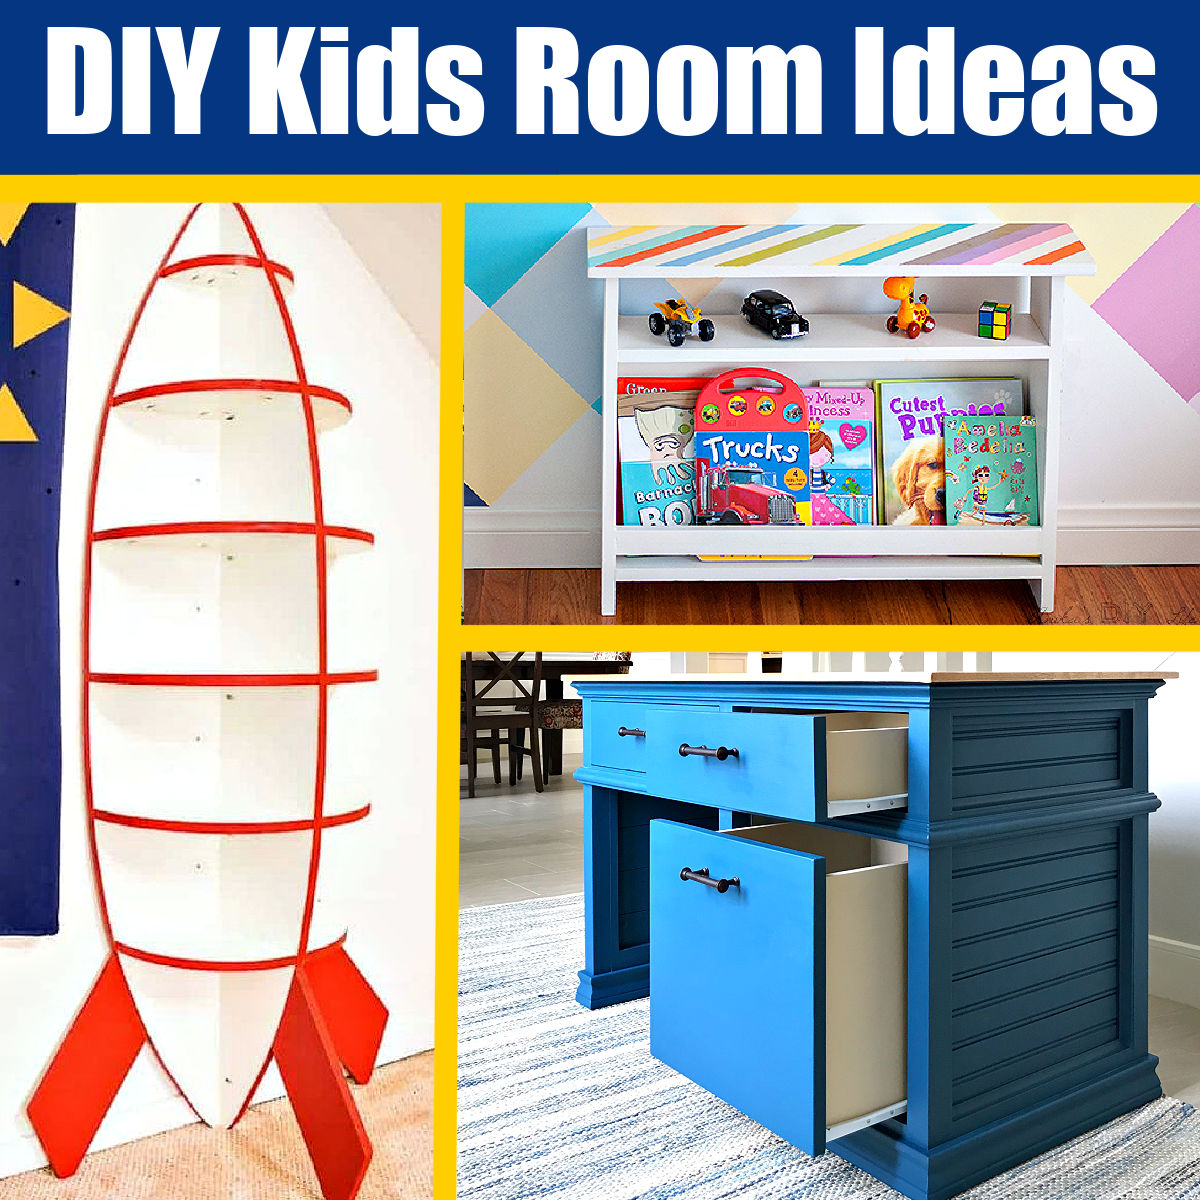 https://www.abbottsathome.com/wp-content/uploads/2018/03/DIY-Kids-Room-Ideas-Decor-Furniture-1.jpg